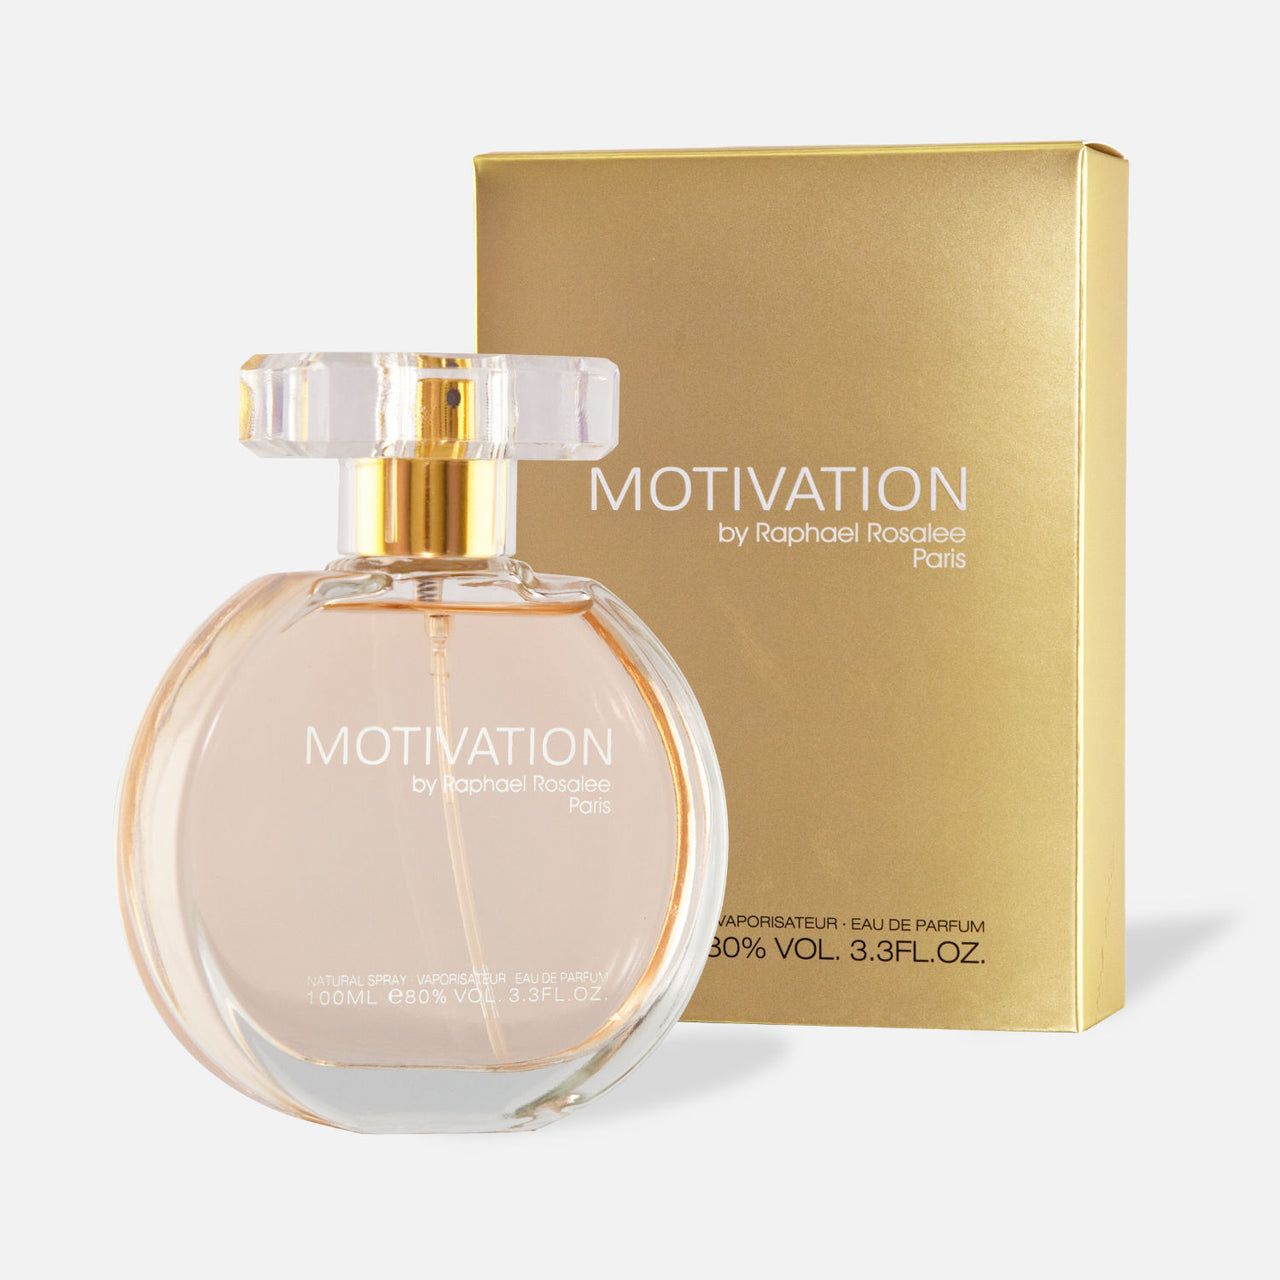 Motivation women Eau de Parfum. Made in France. Fragranza francese femminile e fiorita